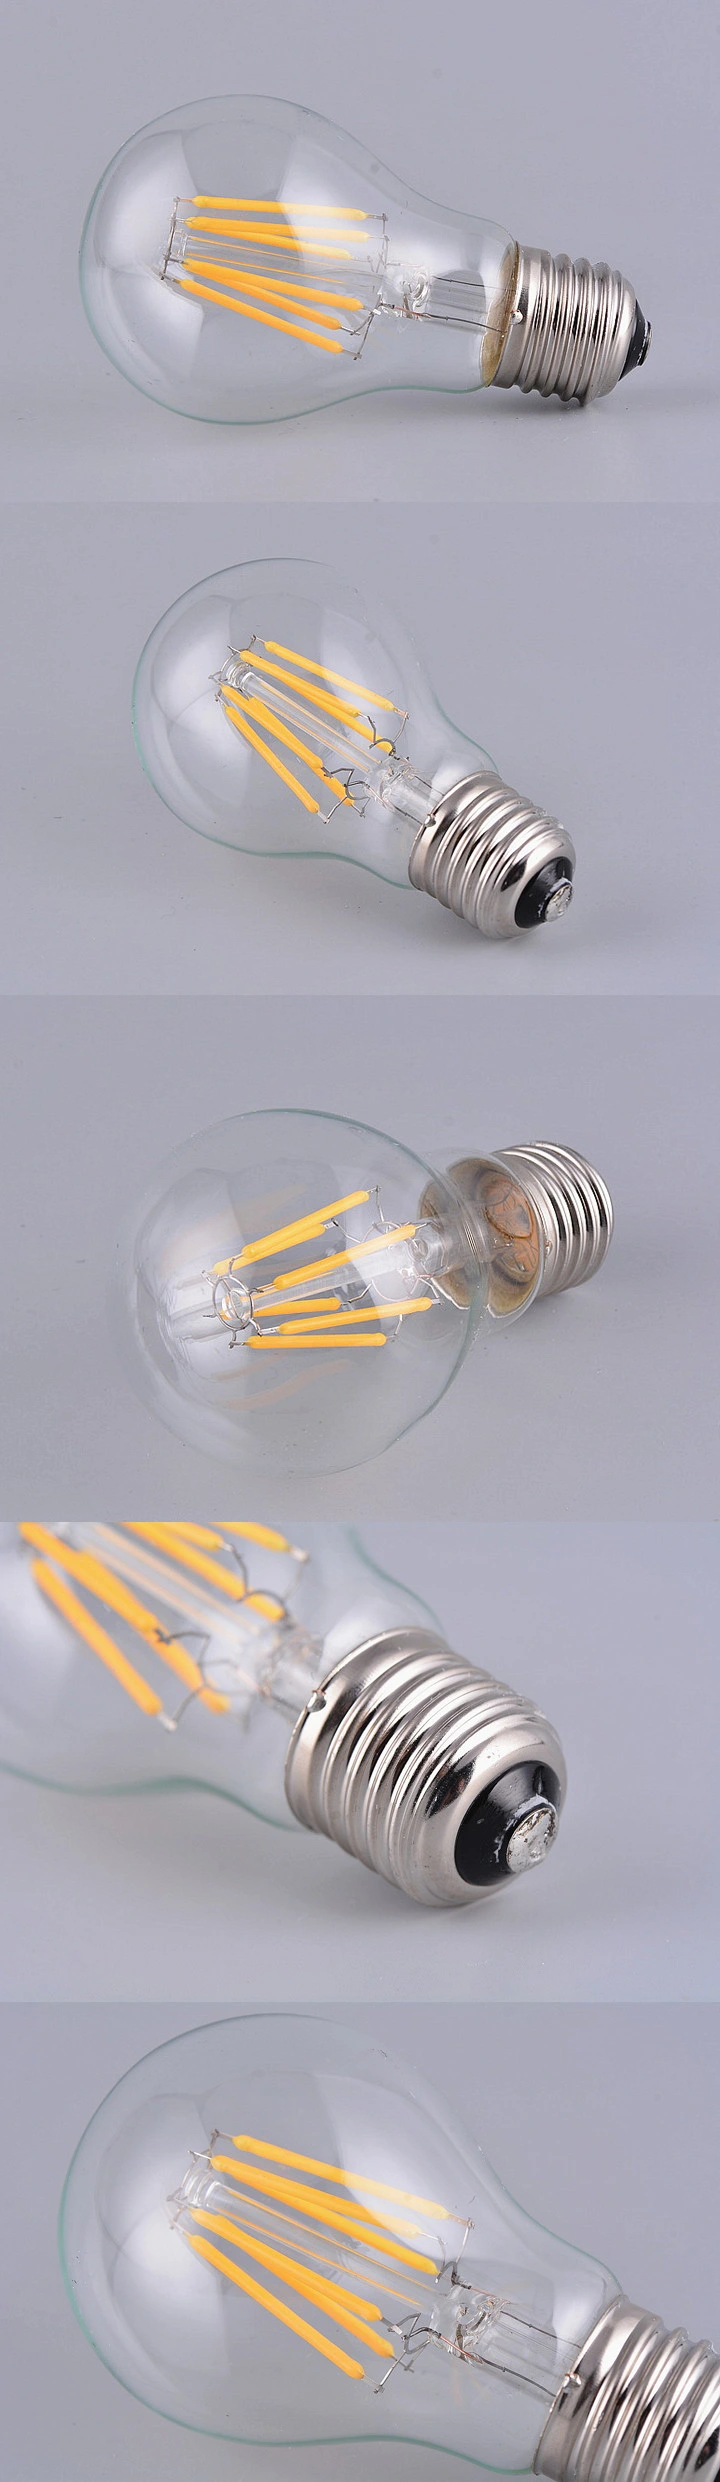 Most Popular A19 6W Warm White LED Bulb Light